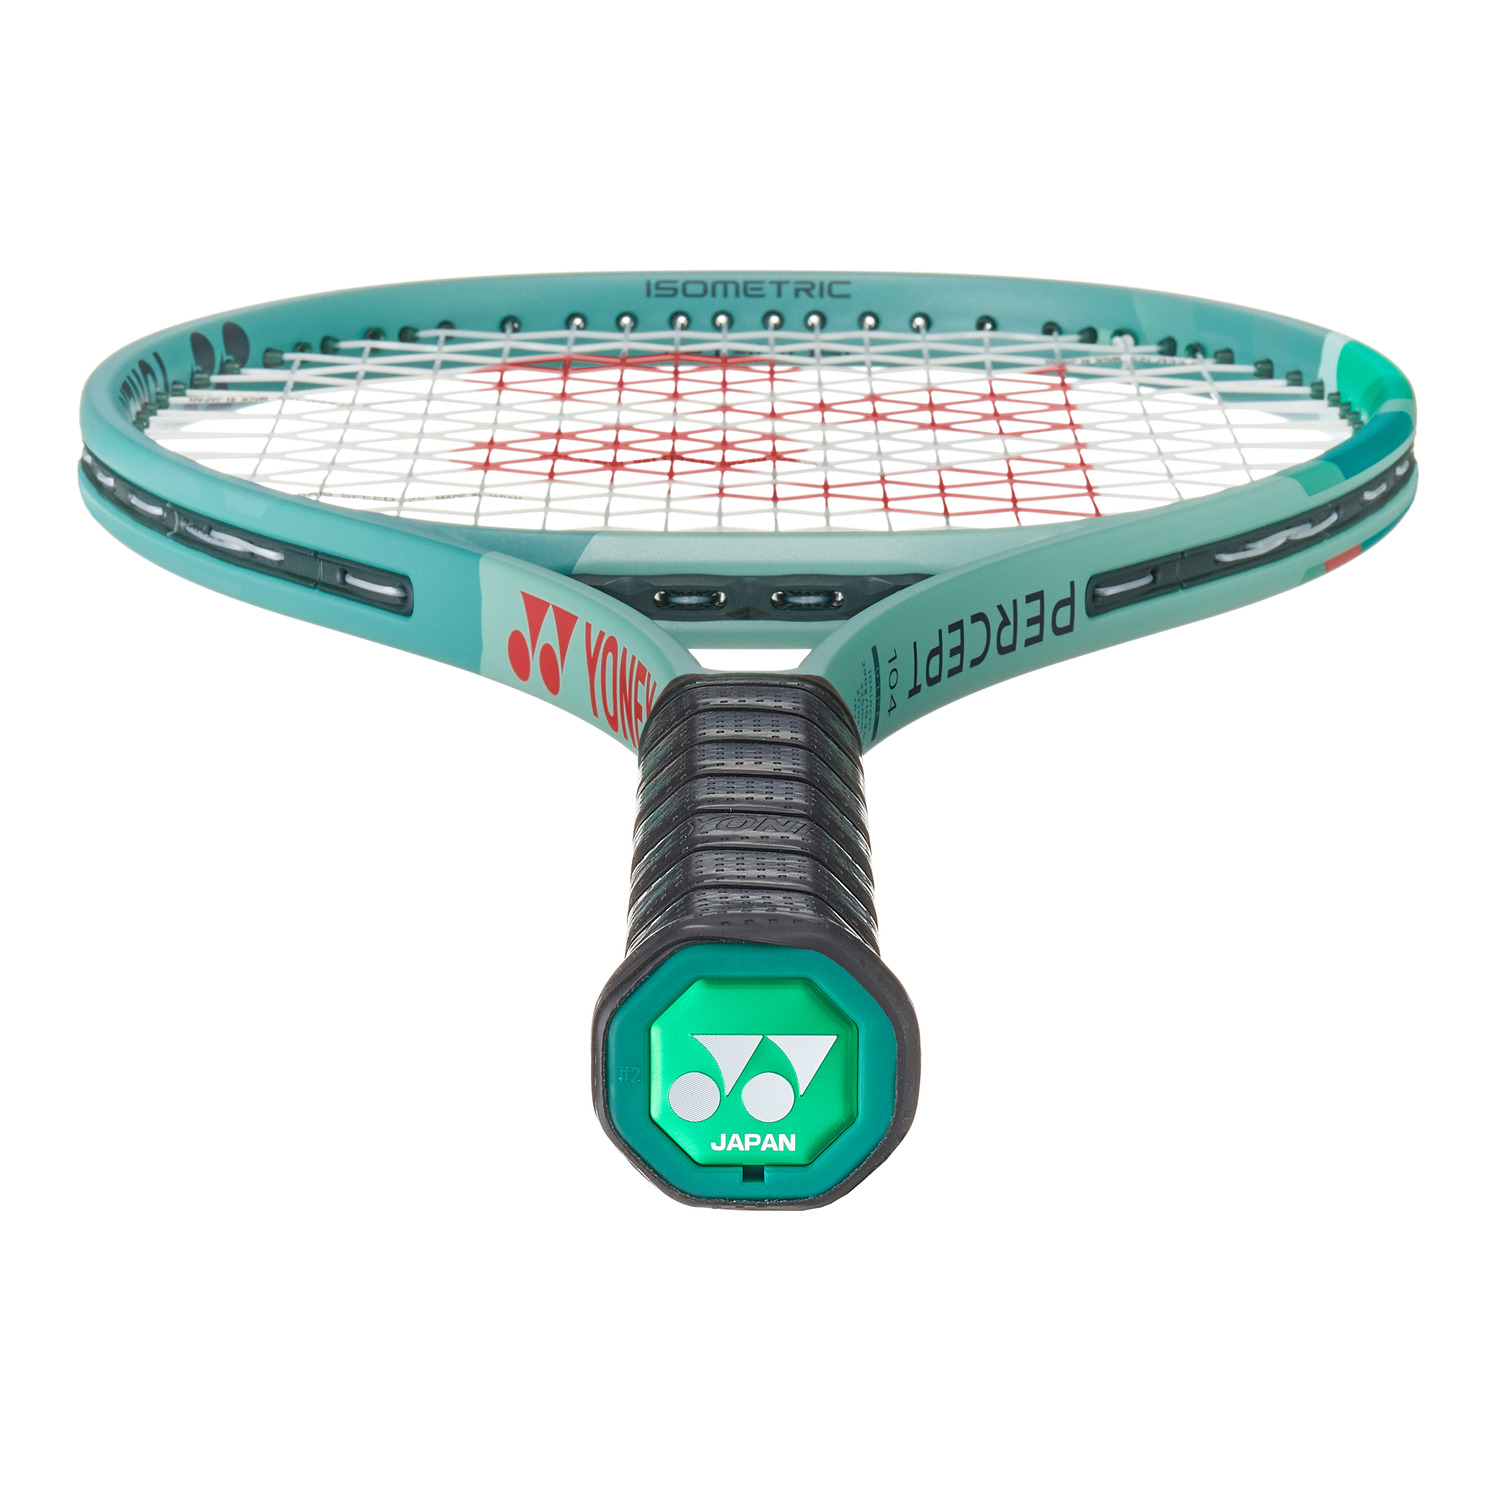 YONEX ヨネックス PERCEPT 104 / パーセプト 104 (16x19) (硬式テニス